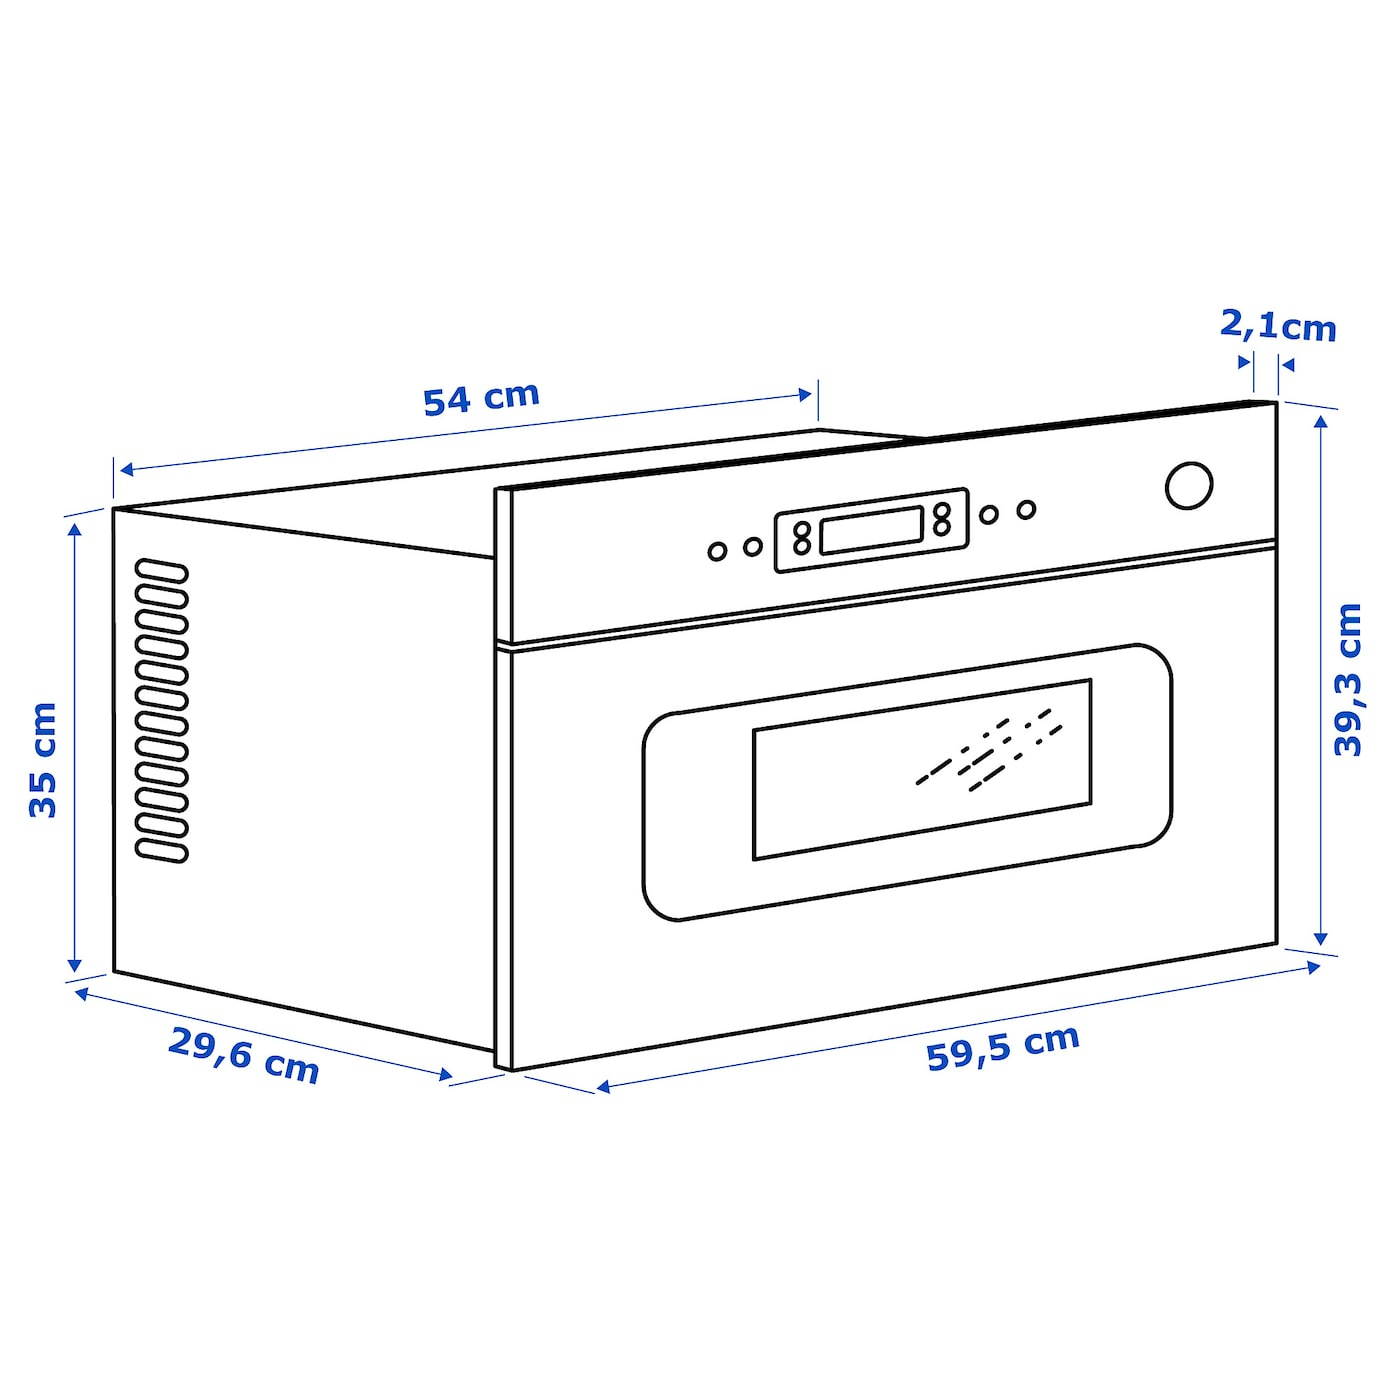 Mattradition Four À Micro-Ondes - Acier Inoxydable encequiconcerne Dimension Micro Onde Encastrable Ikea